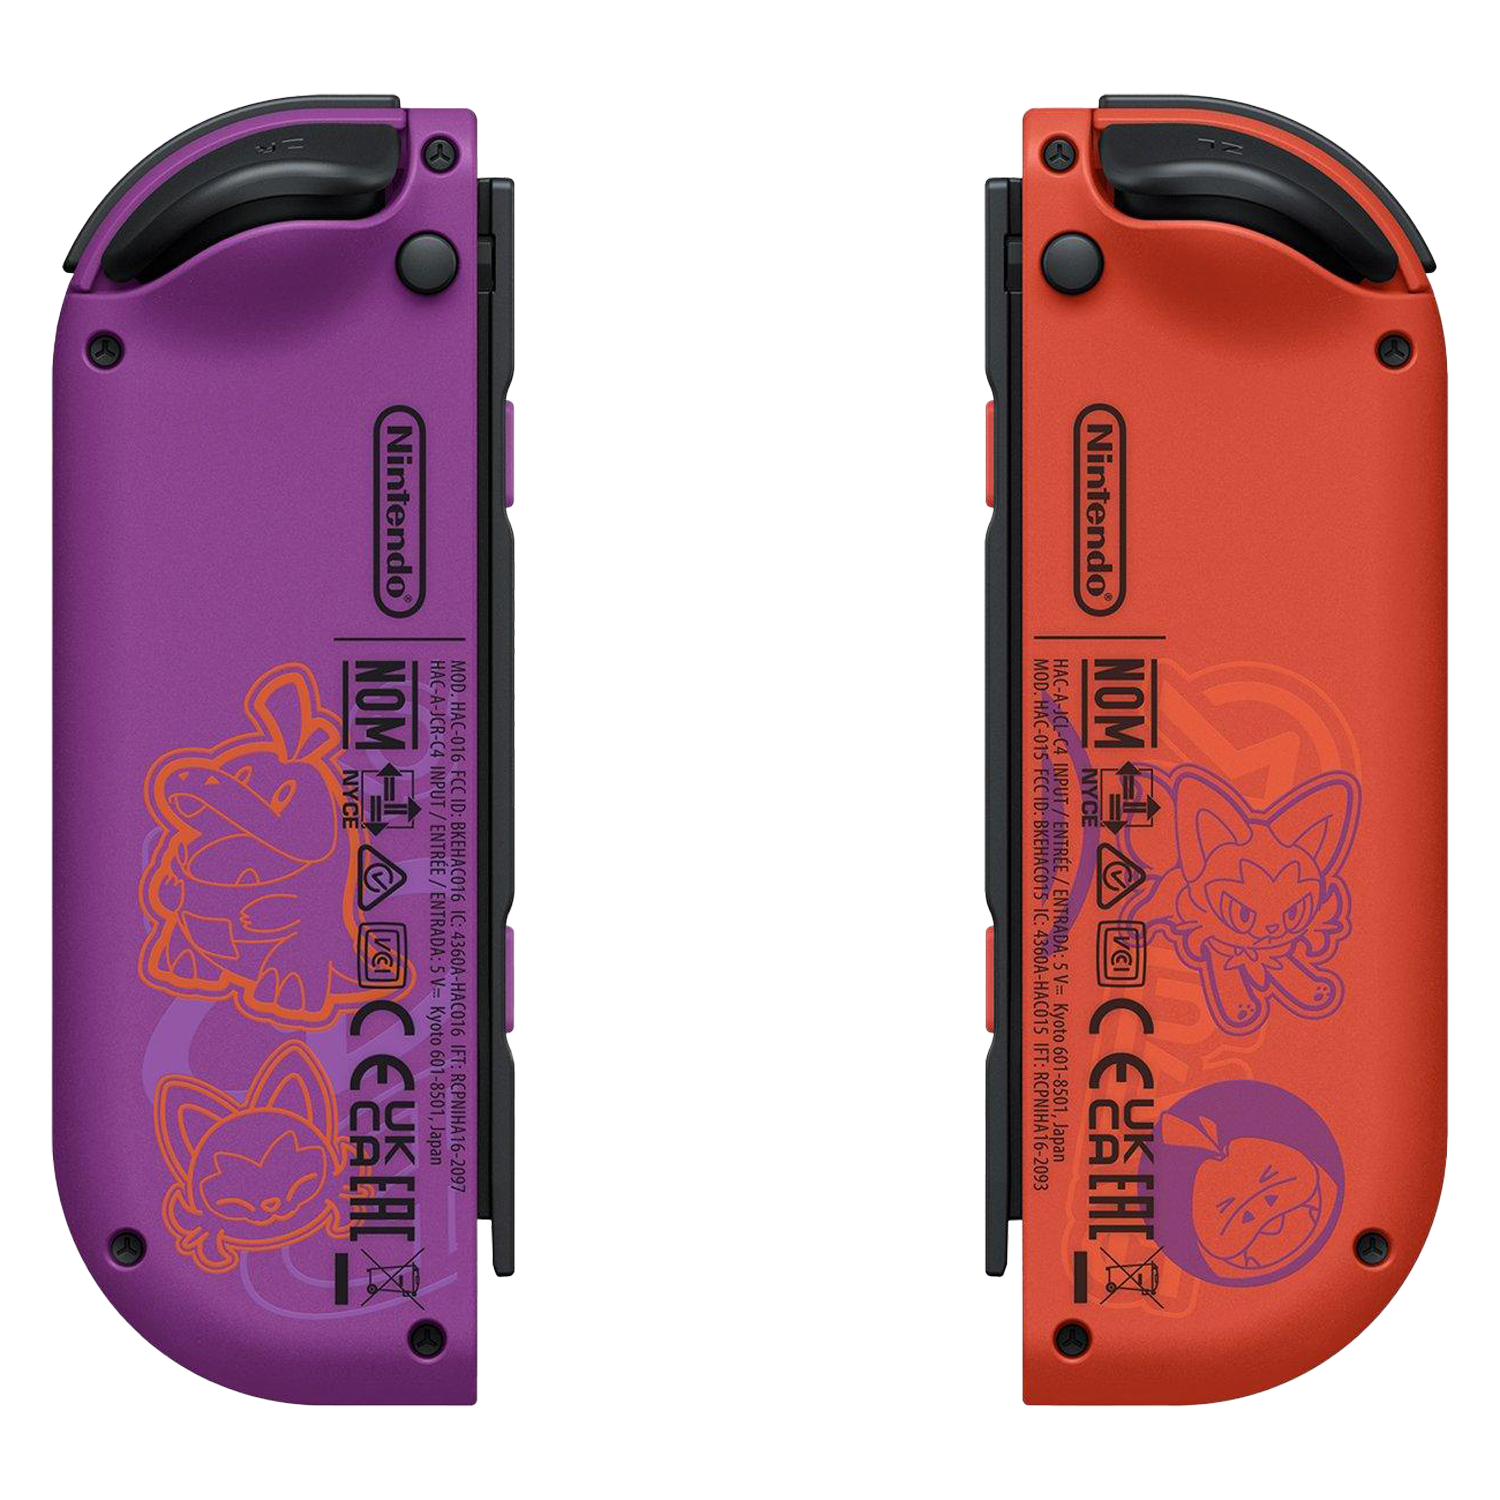 Console Nintendo Switch 64GB Pokemon Scarlet e Violet Edition - (HEG-S-KEAAA)(Japan)
